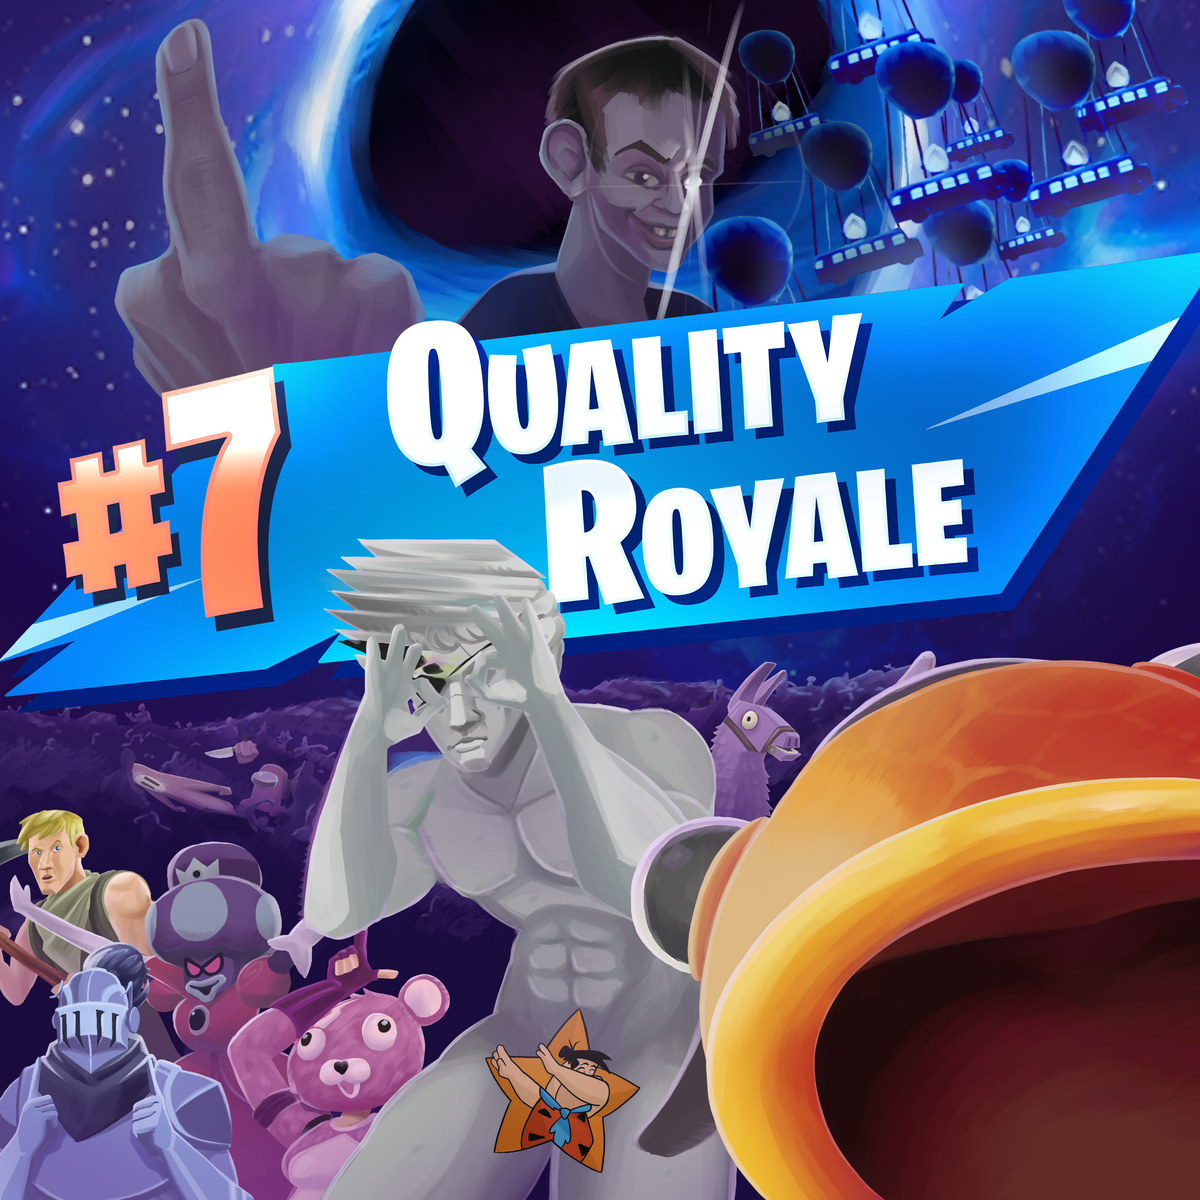 7 Quality Royale